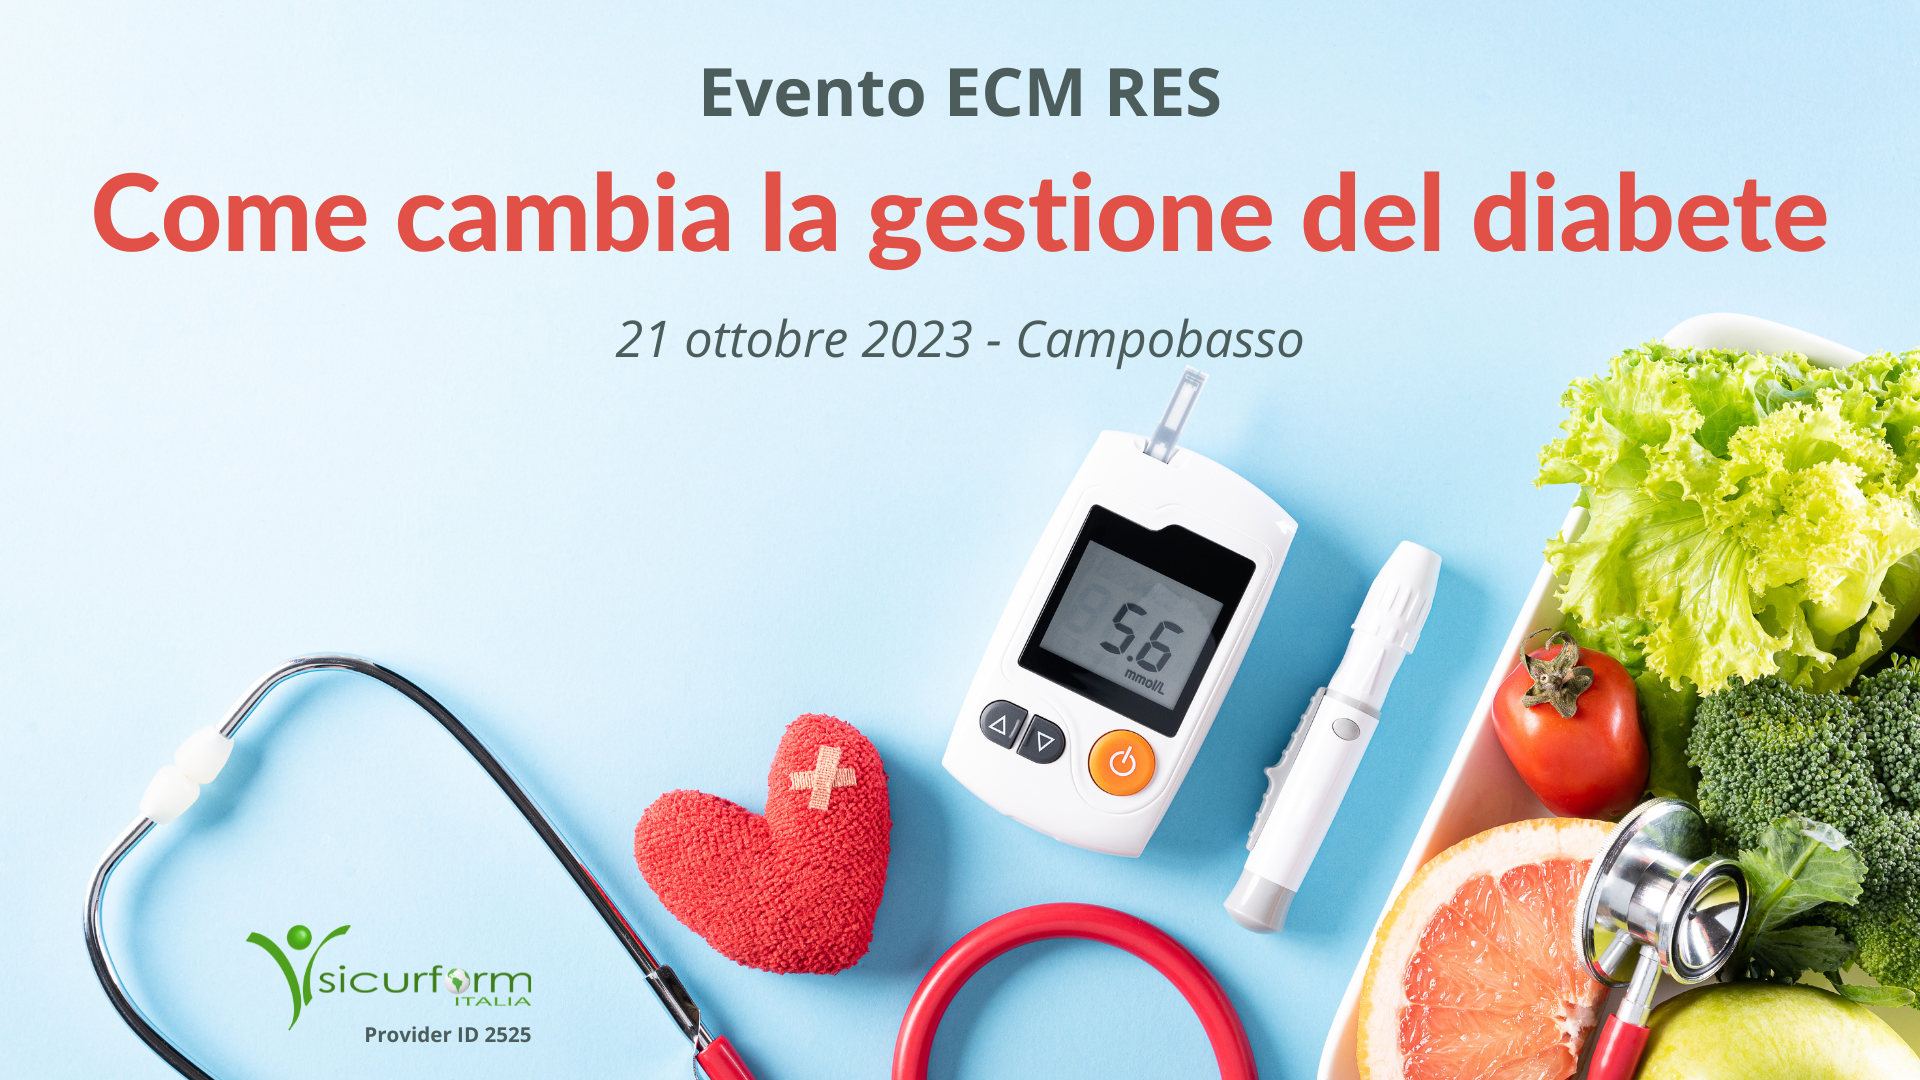 Evento ECM: “Come cambia la gestione del diabete”